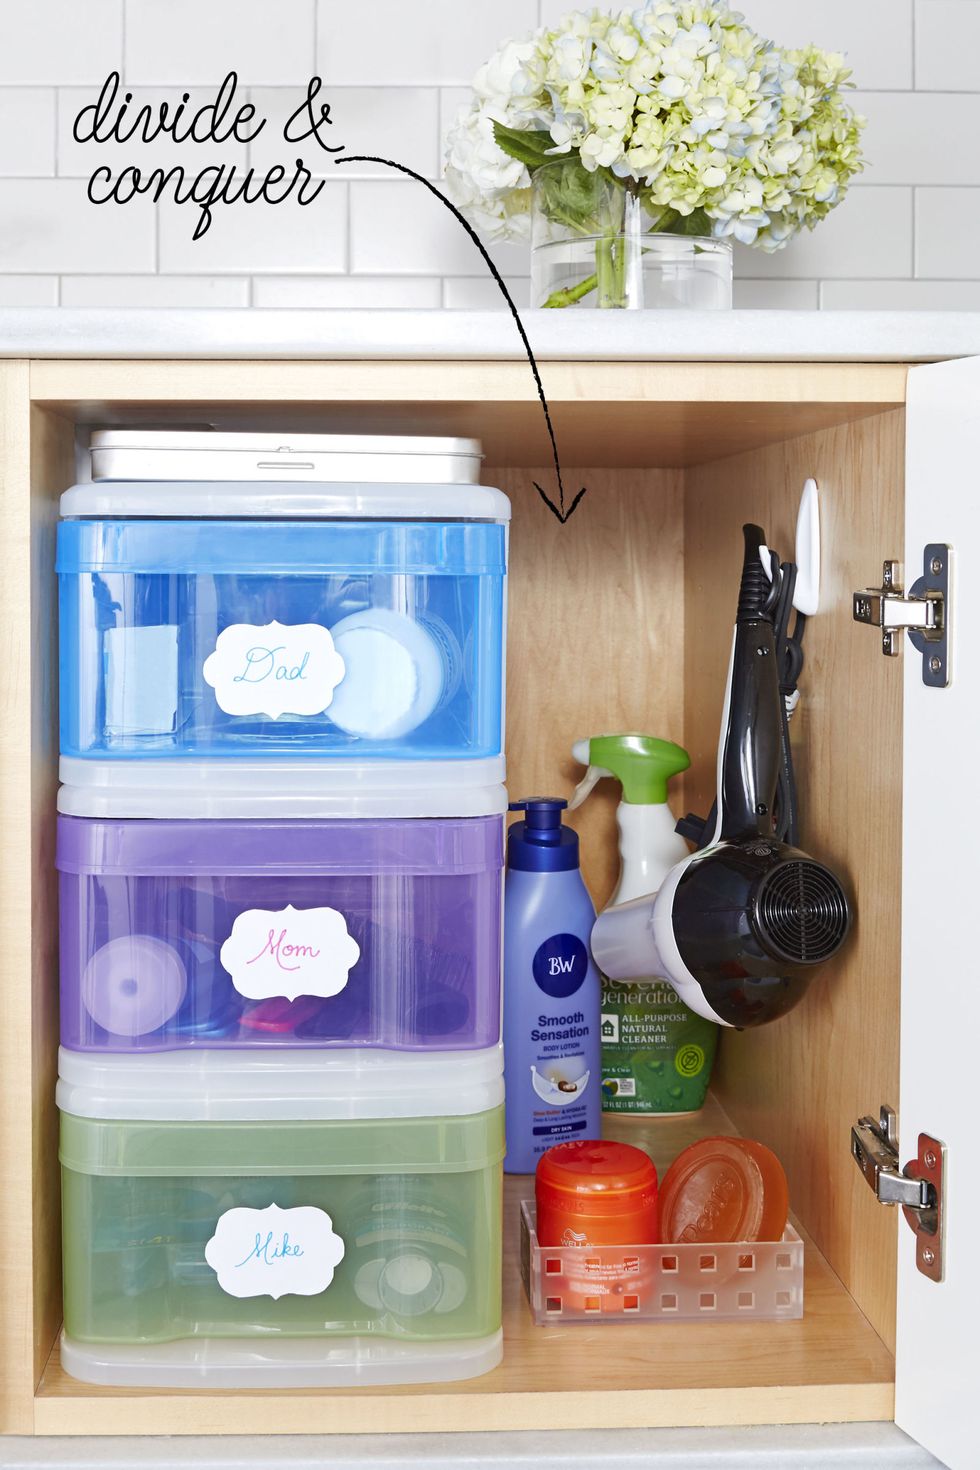 Bathroom Organizer Ideas: 12 Pretty (and Practical!) Organizing Products